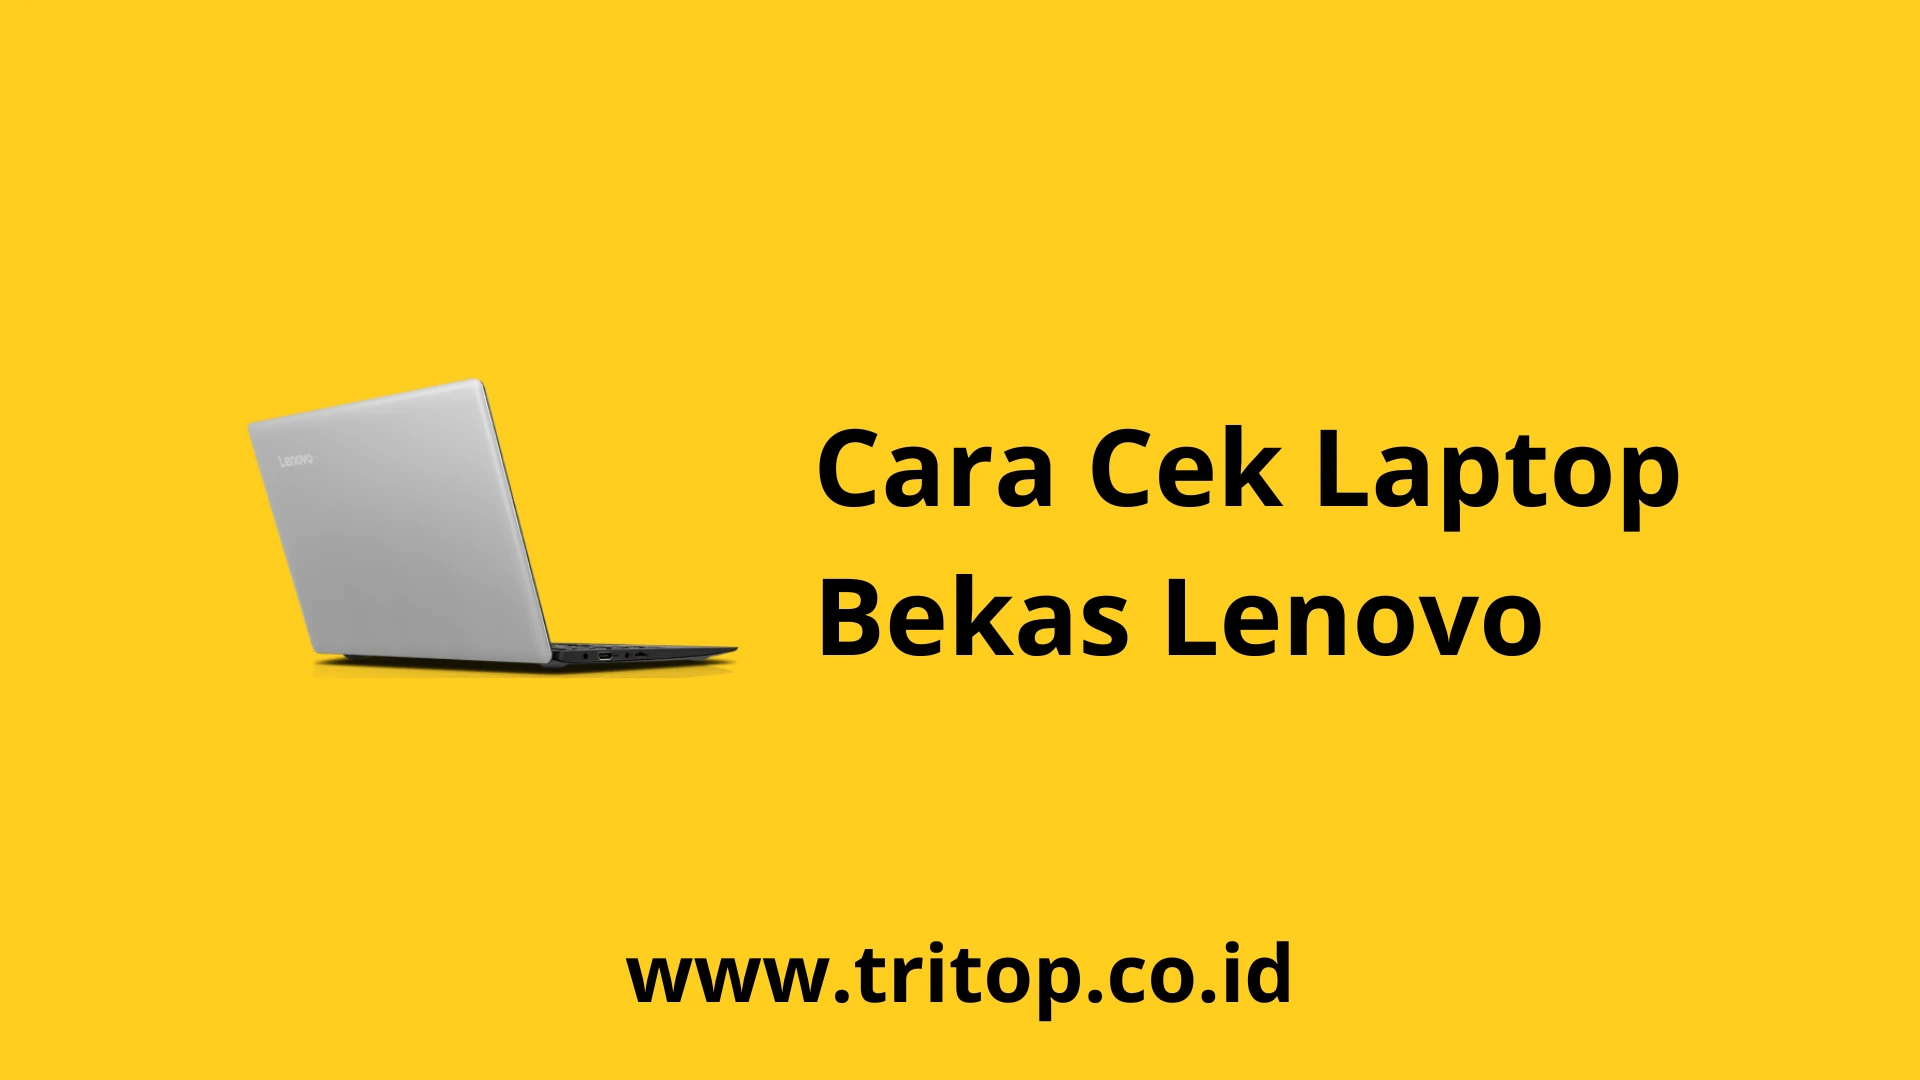 Cara Cek Laptop Bekas Lenovo www.tritop.co.id